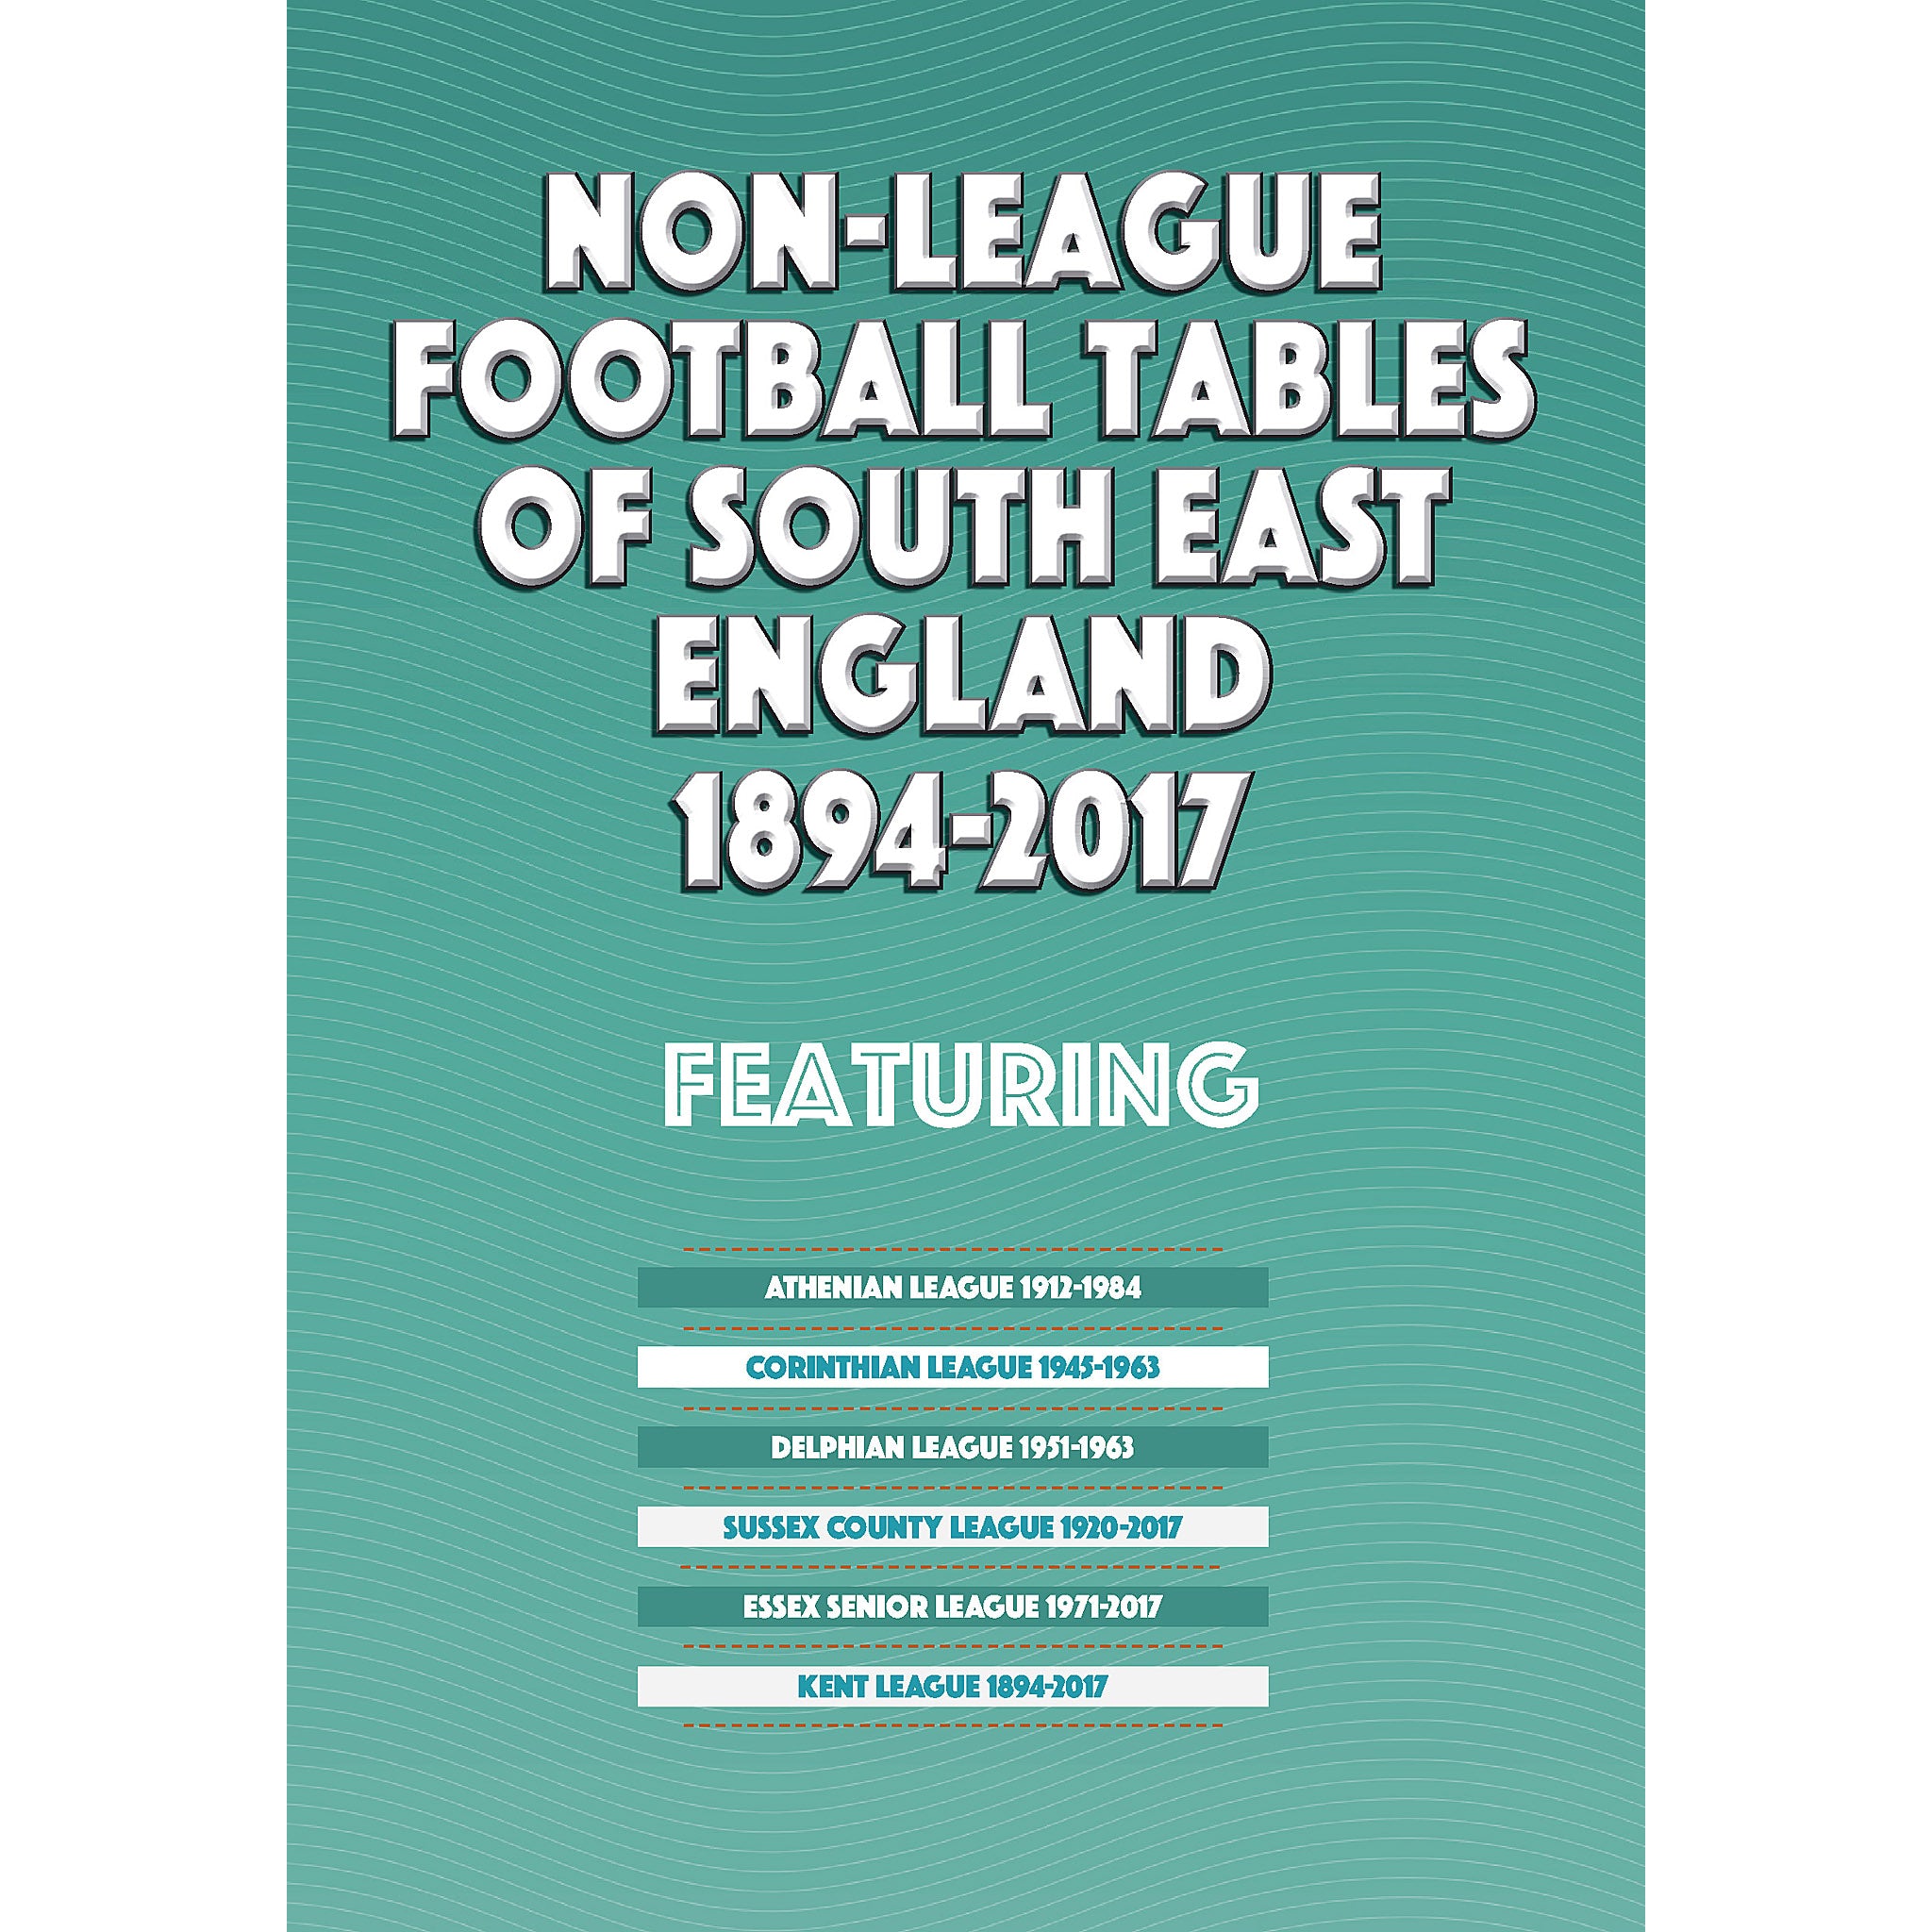 Non-League Football Tables of South East England 1894-2017